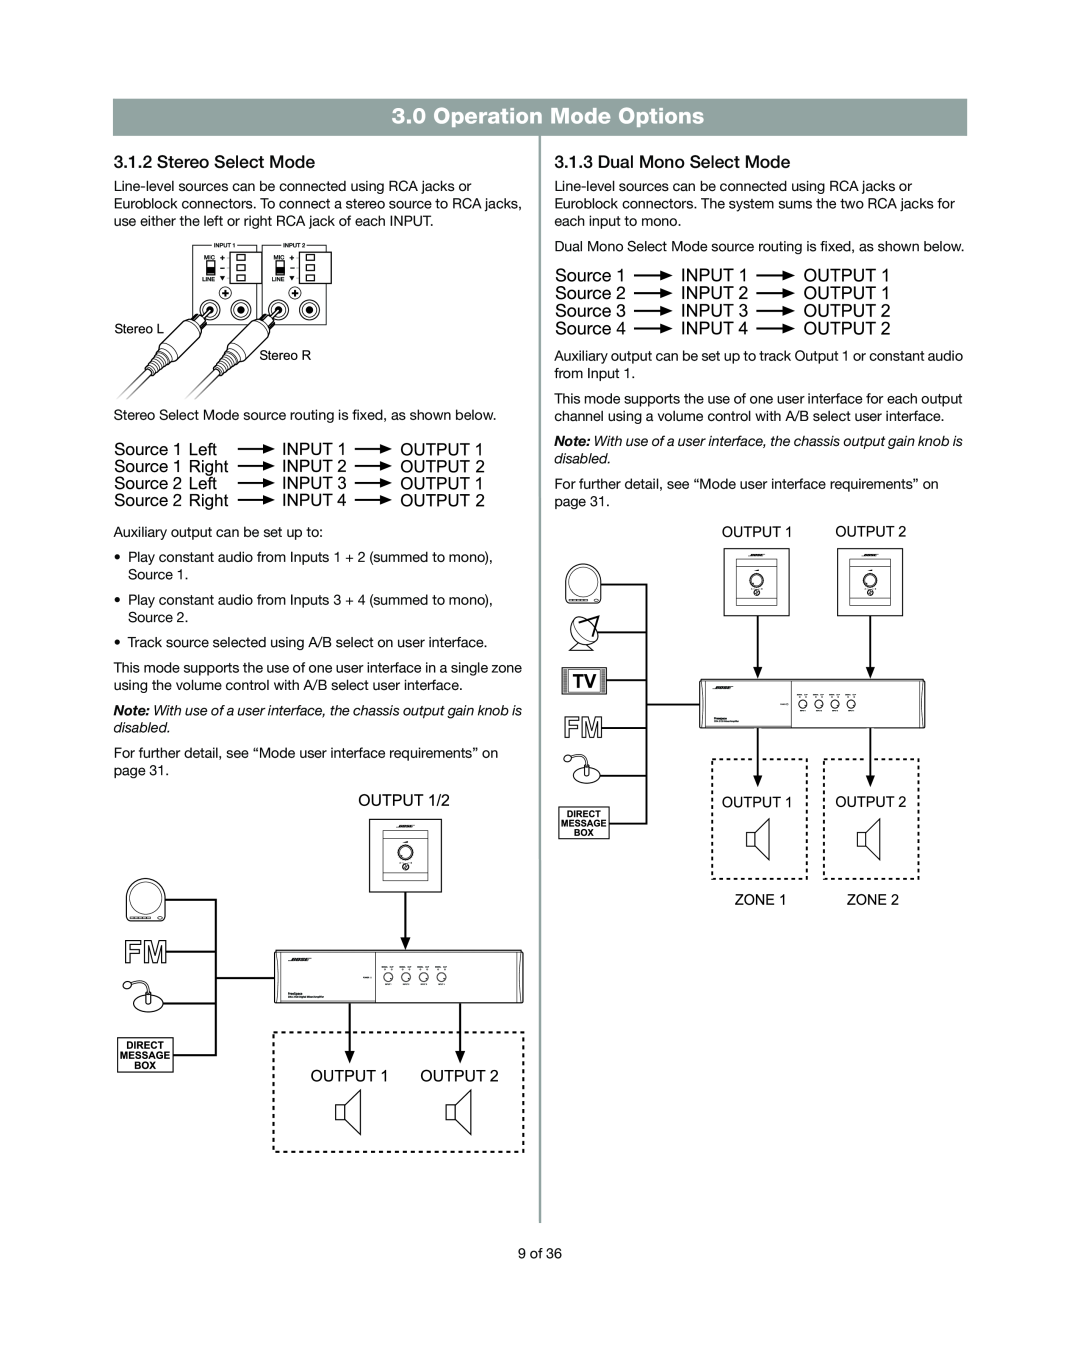 Bose DXA2120 manual Operation Mode Options, Stereo Select Mode, Dual Mono Select Mode 